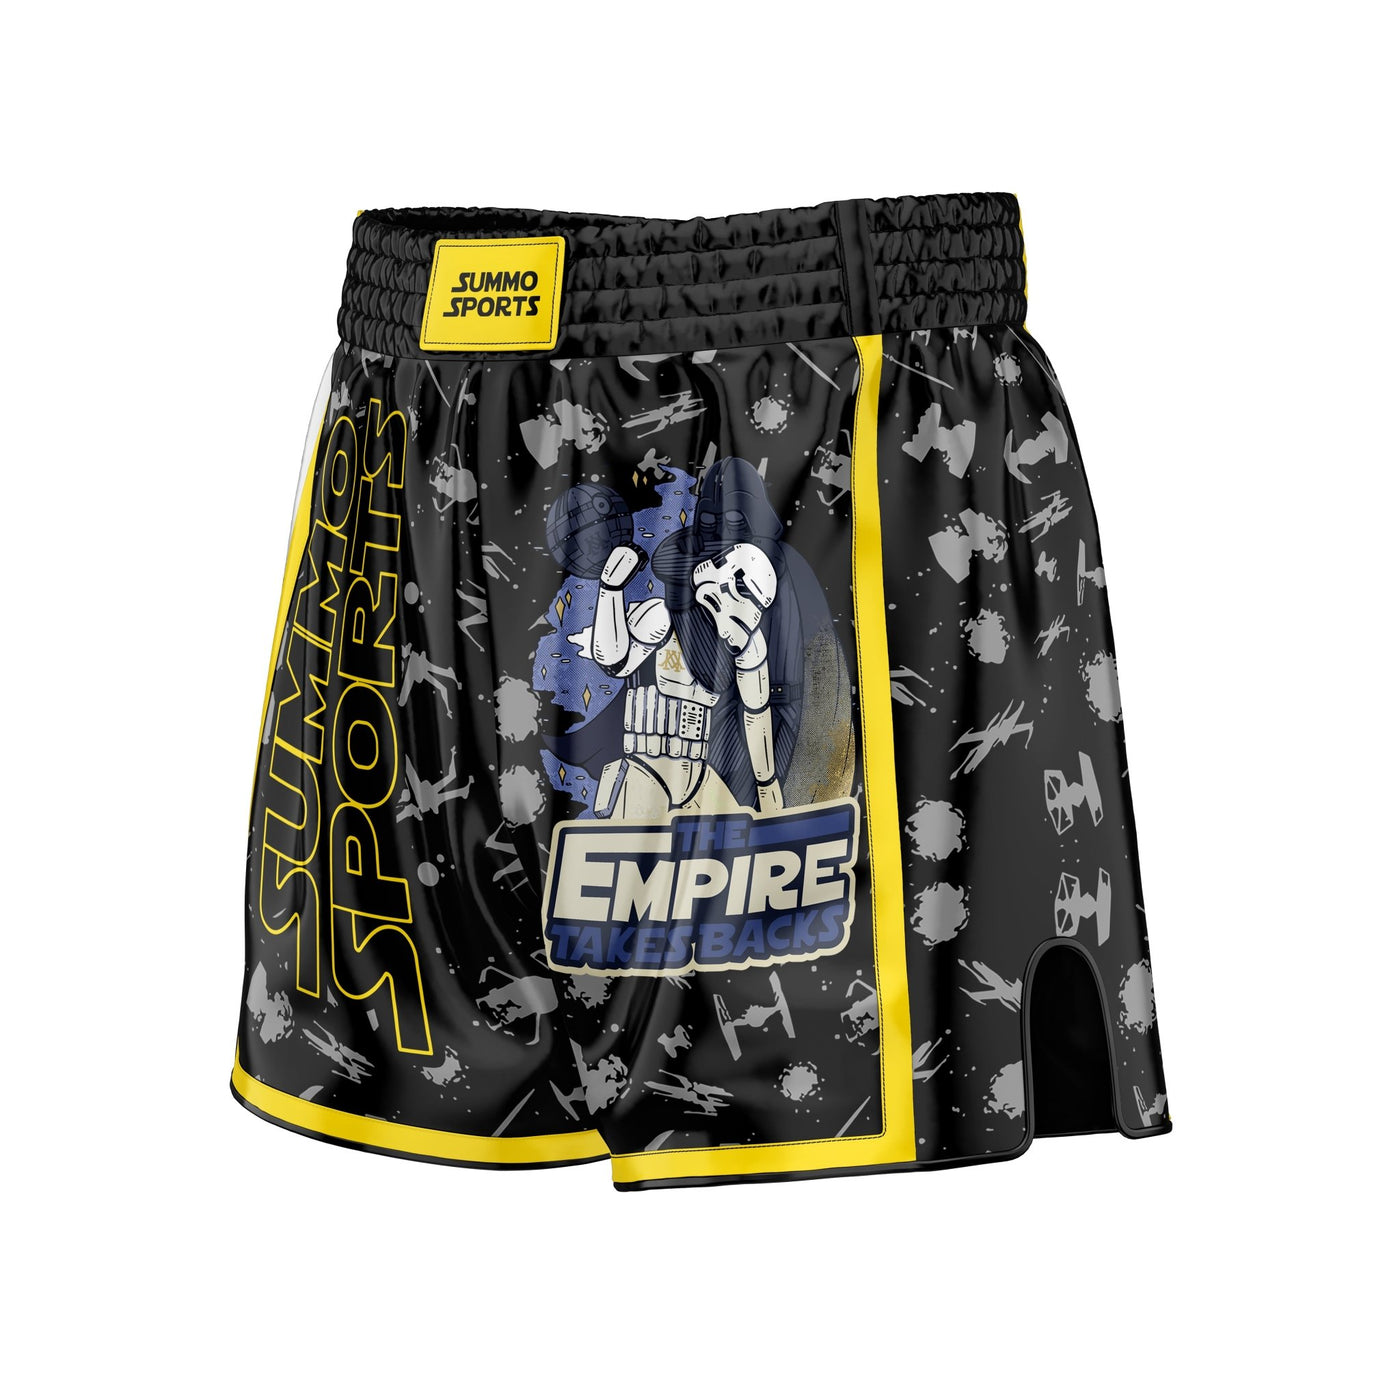 Galactic Grapplers Muay Thai Shorts - Summo Sports